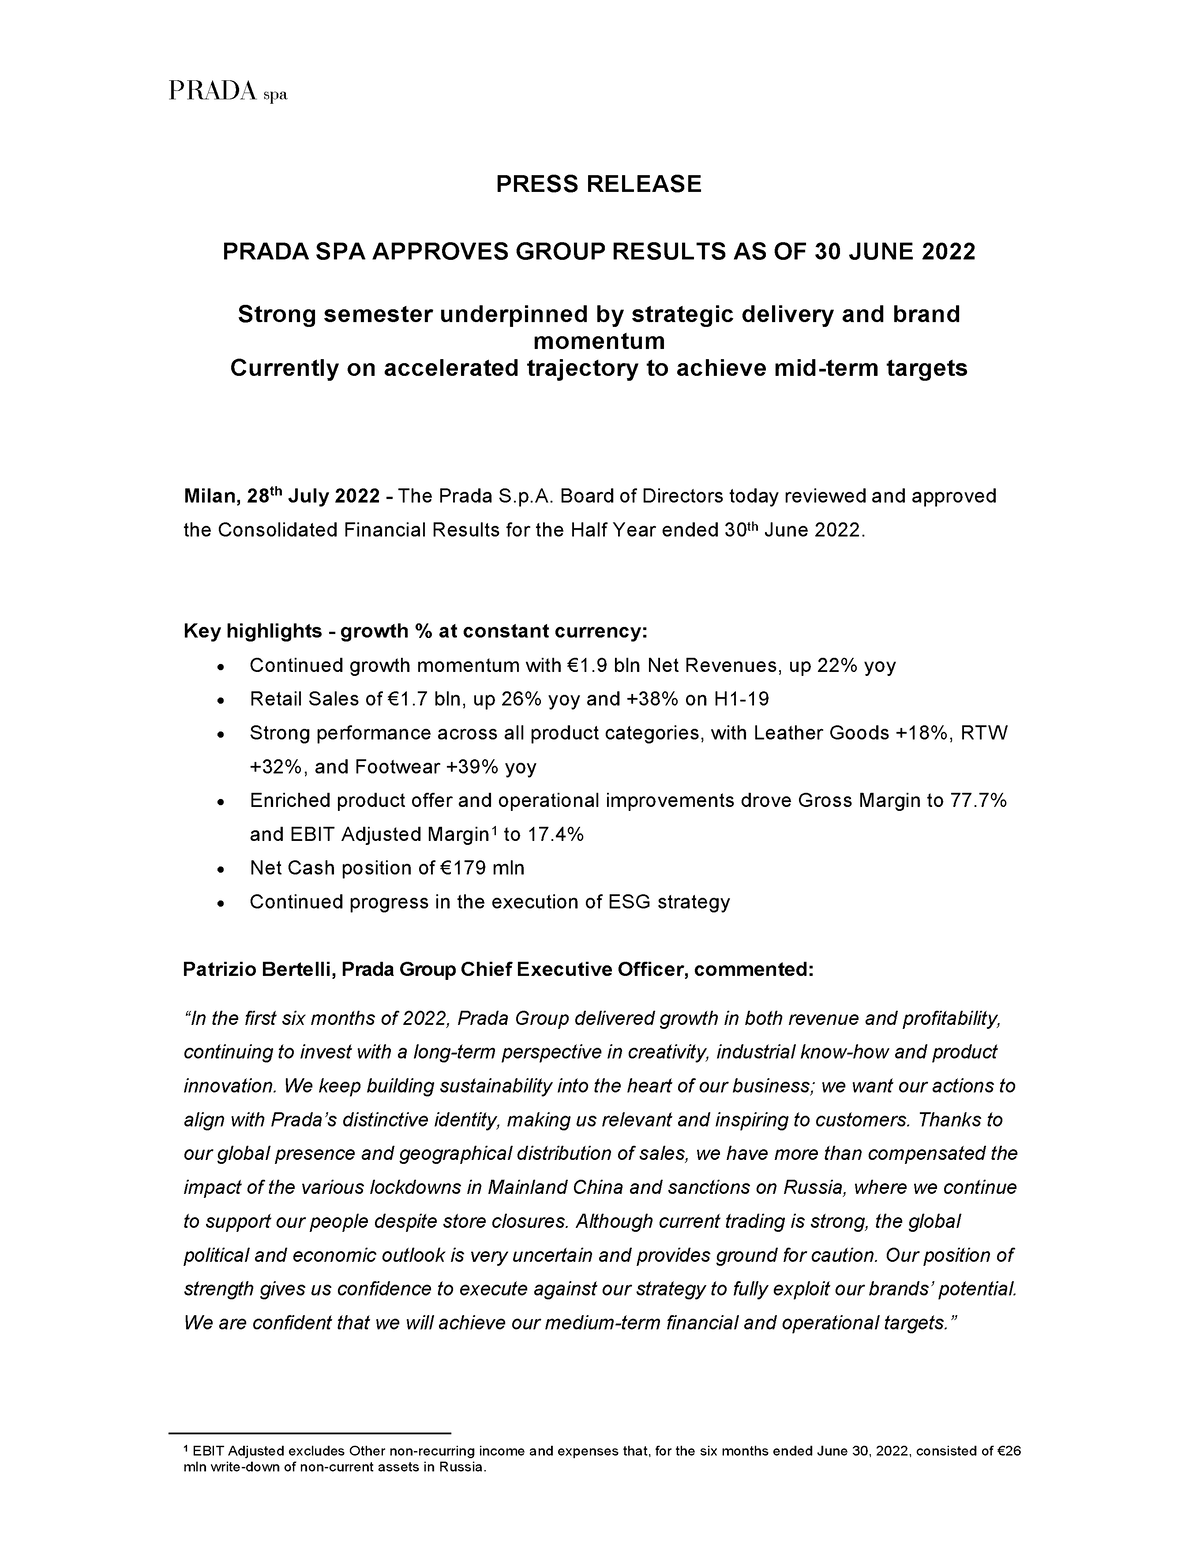 Operating cash flow Italian company Prada Group 2014-2022